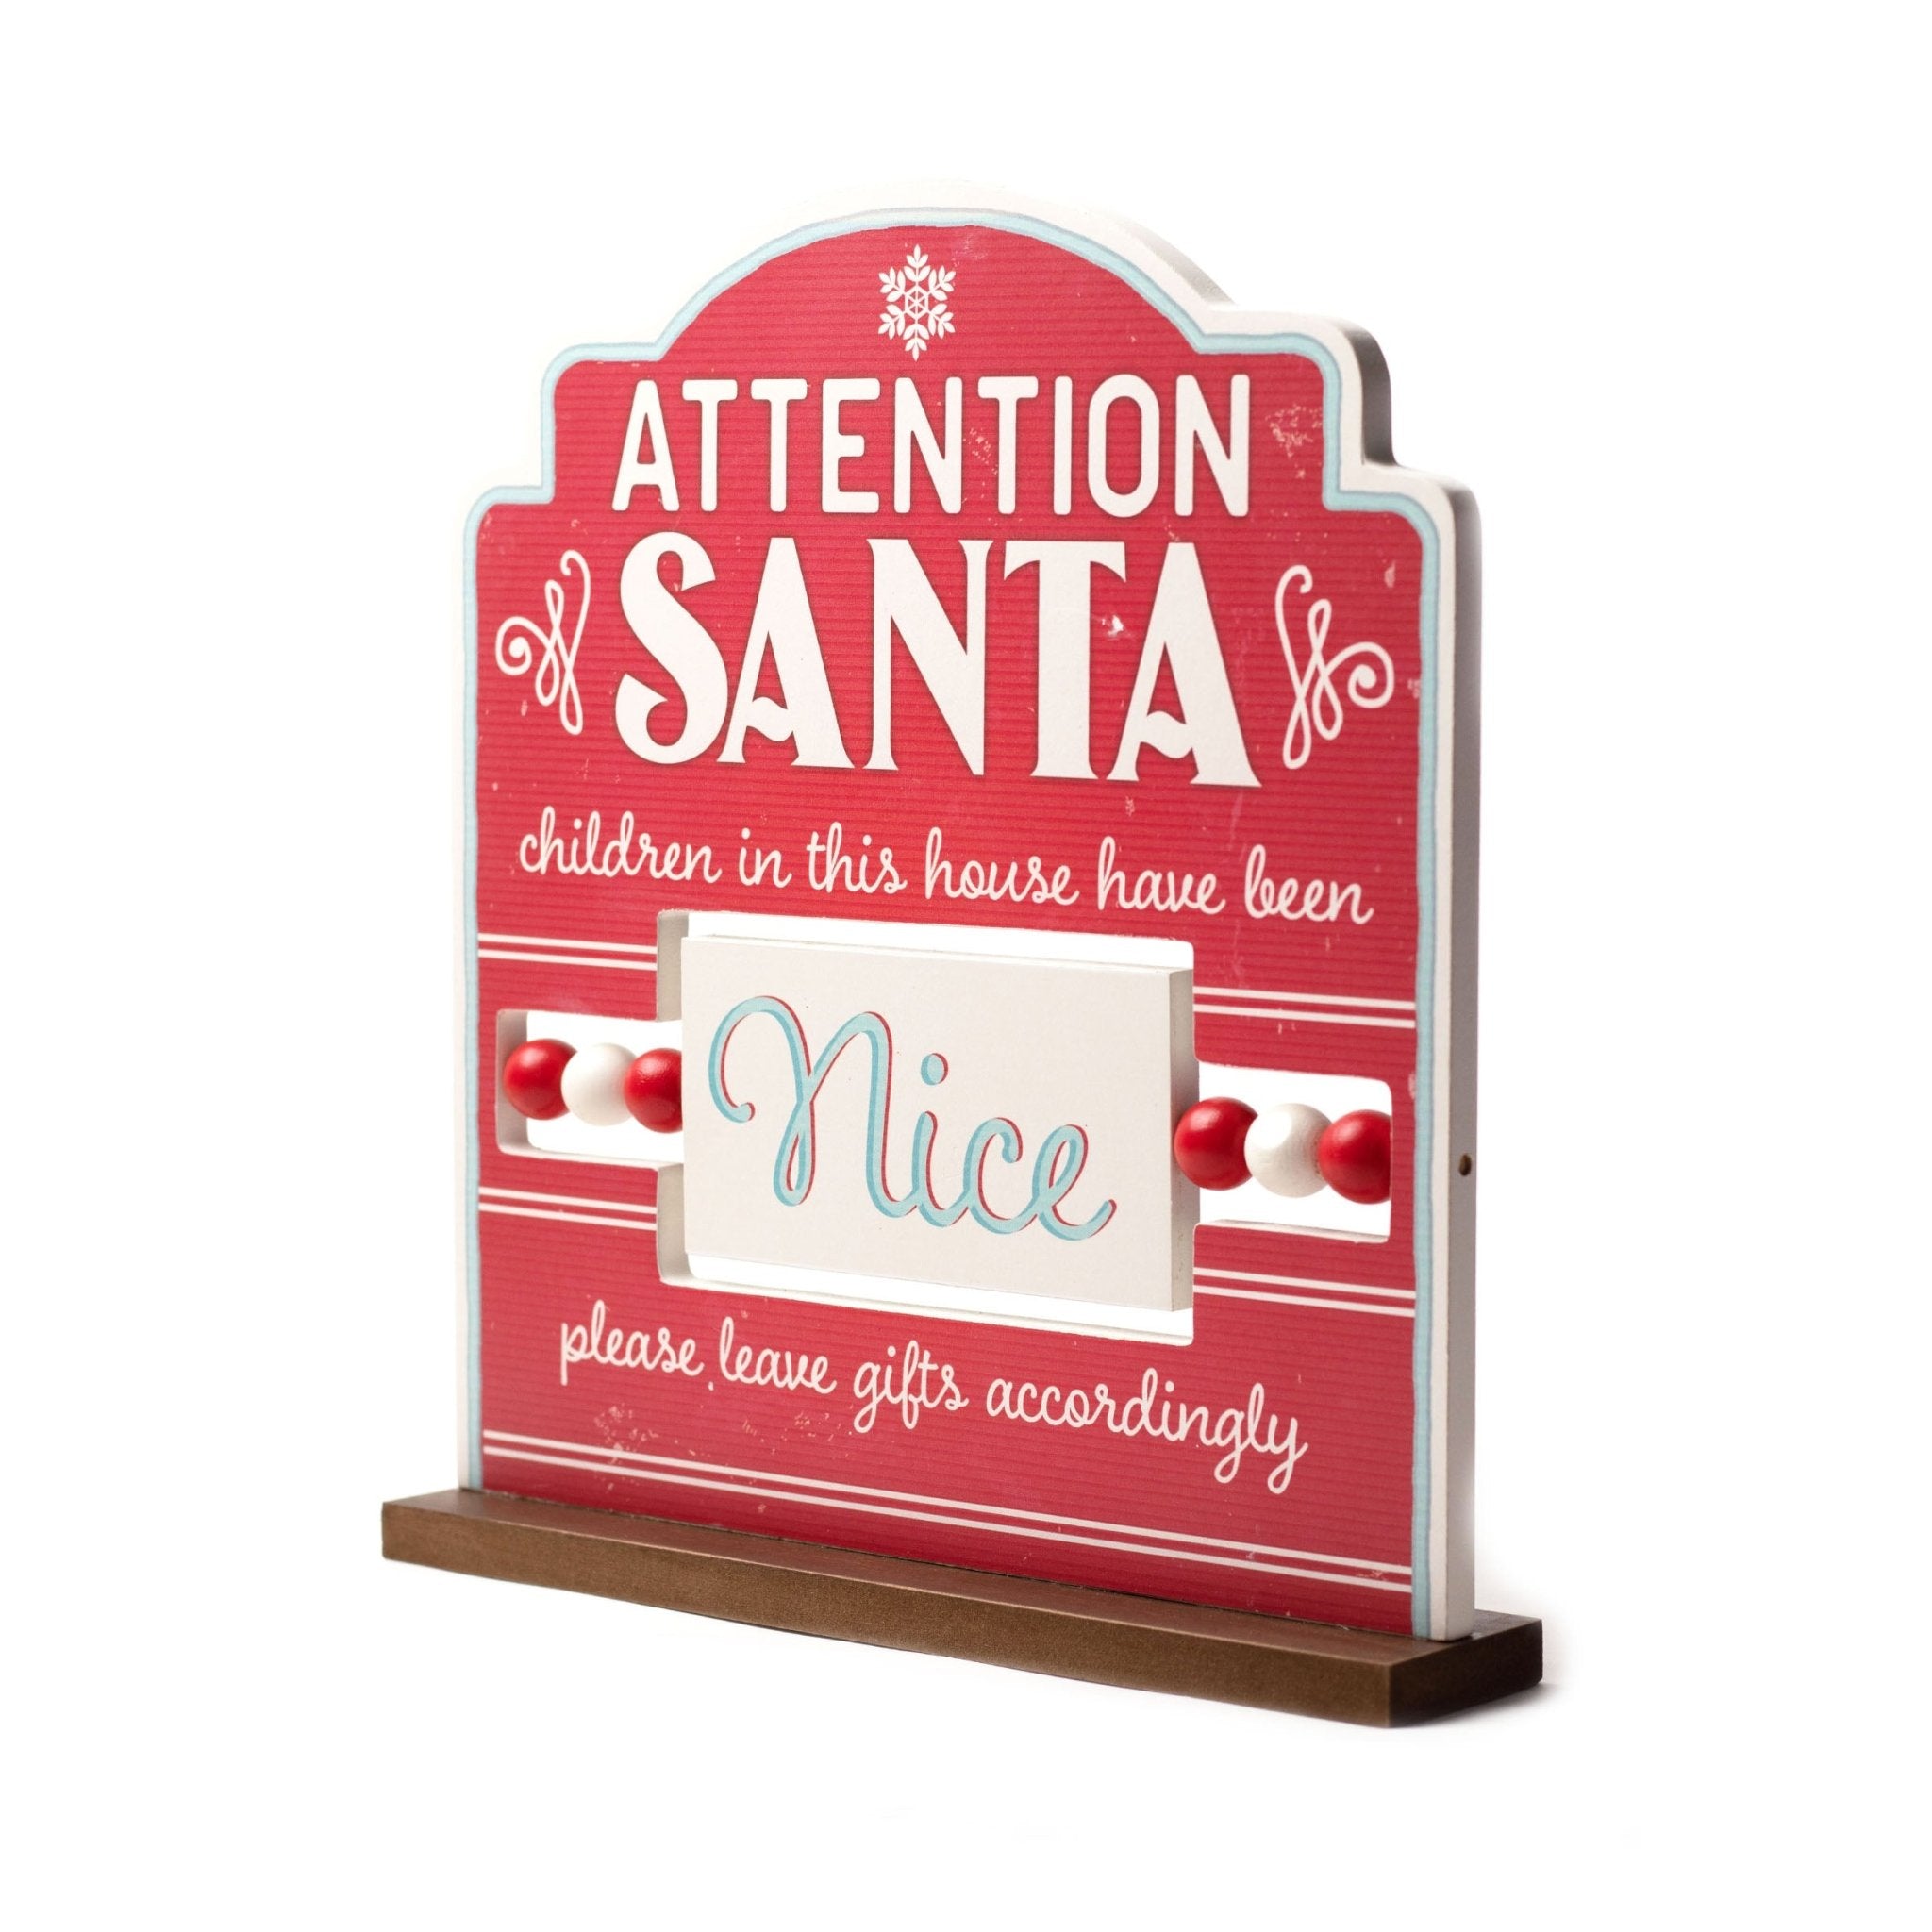 Attention Santa Nice/Naughty Tabletop Sign 25x28cm 2528002 - MODA FLORA Santa's Workshop